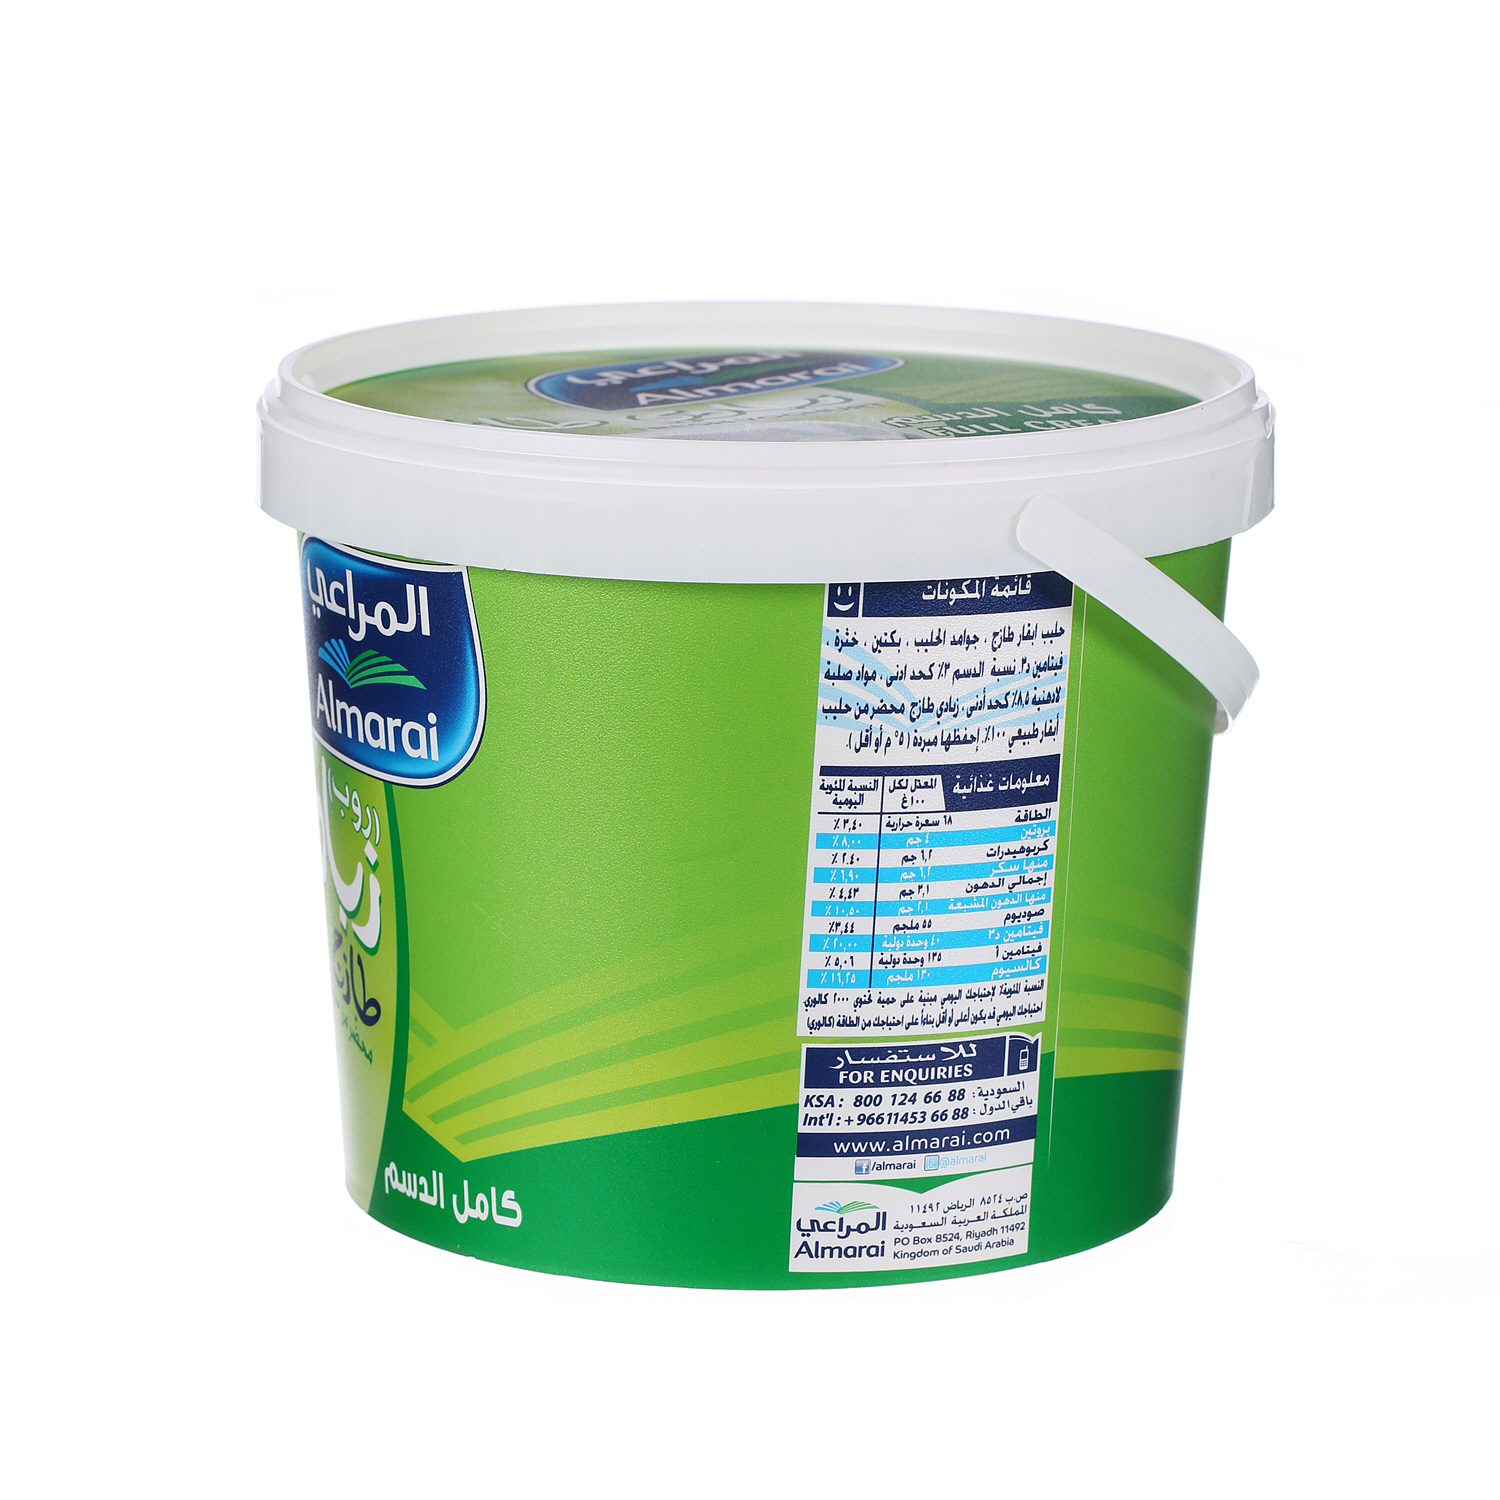 Al Marai Fresh Yoghurt Full Cream 2 Kg